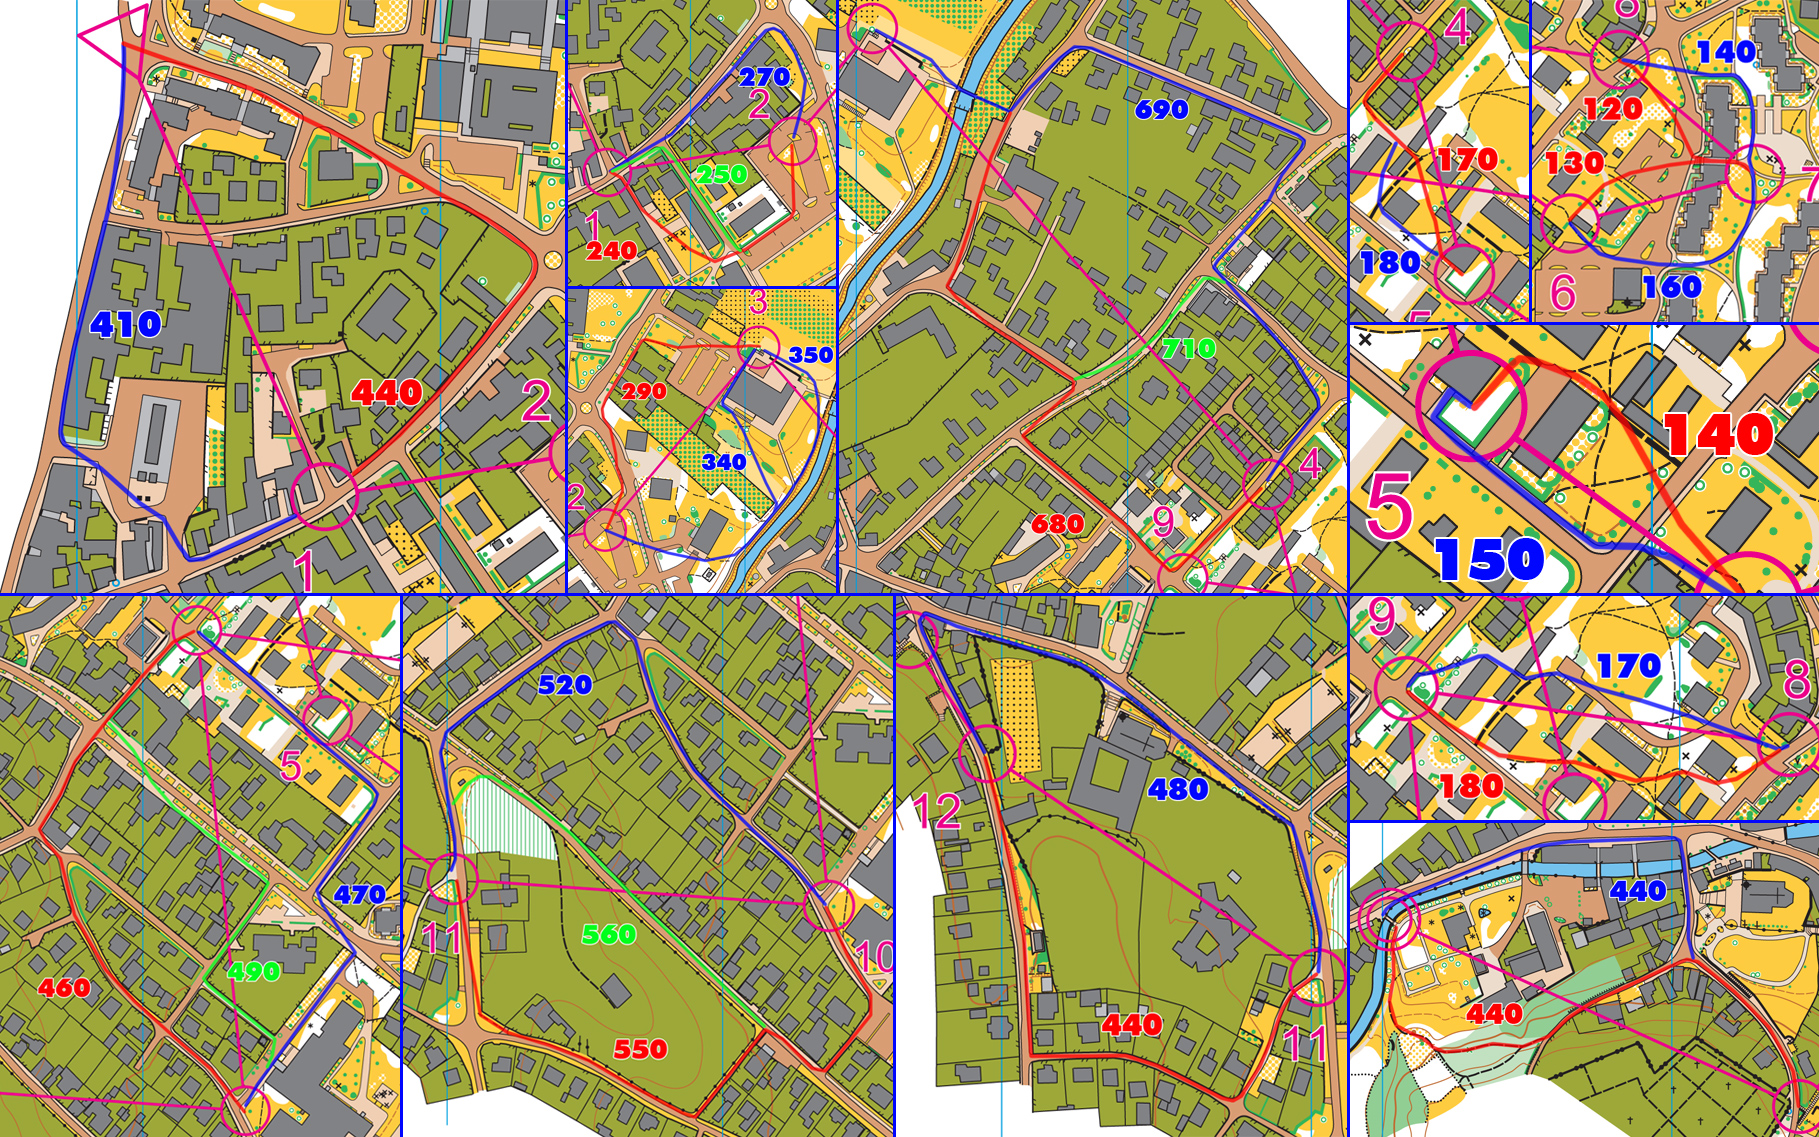 Samobor sprint - routechoices (23.05.2014)